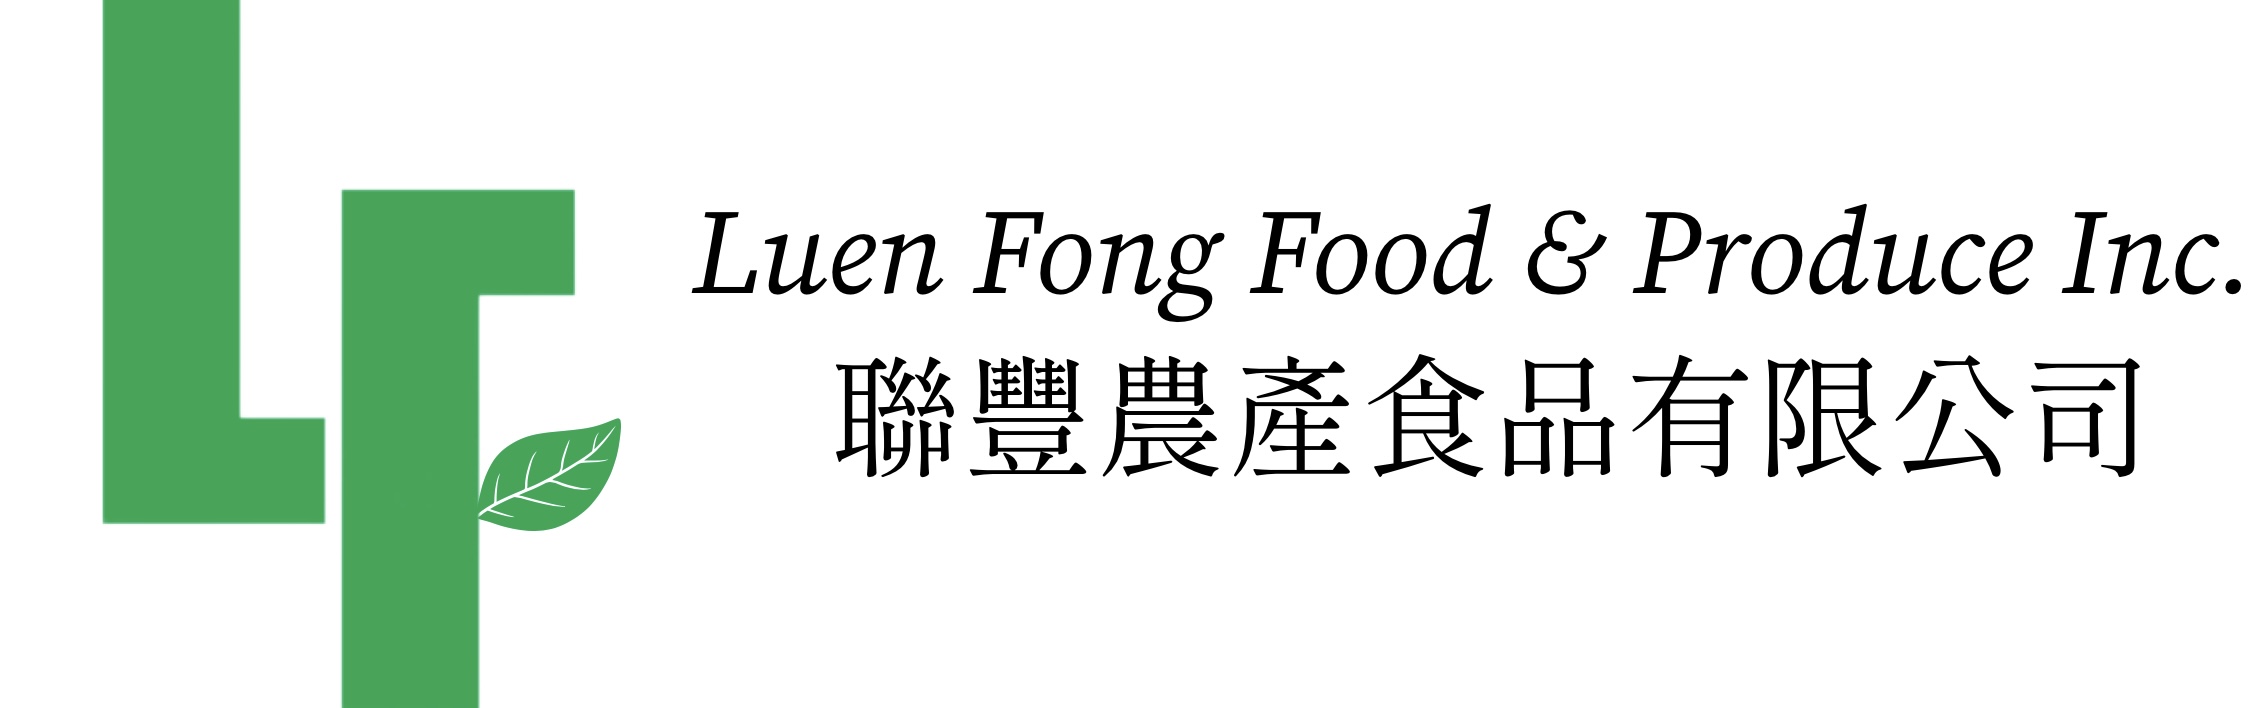 Luen Fong Food & Produce Inc.